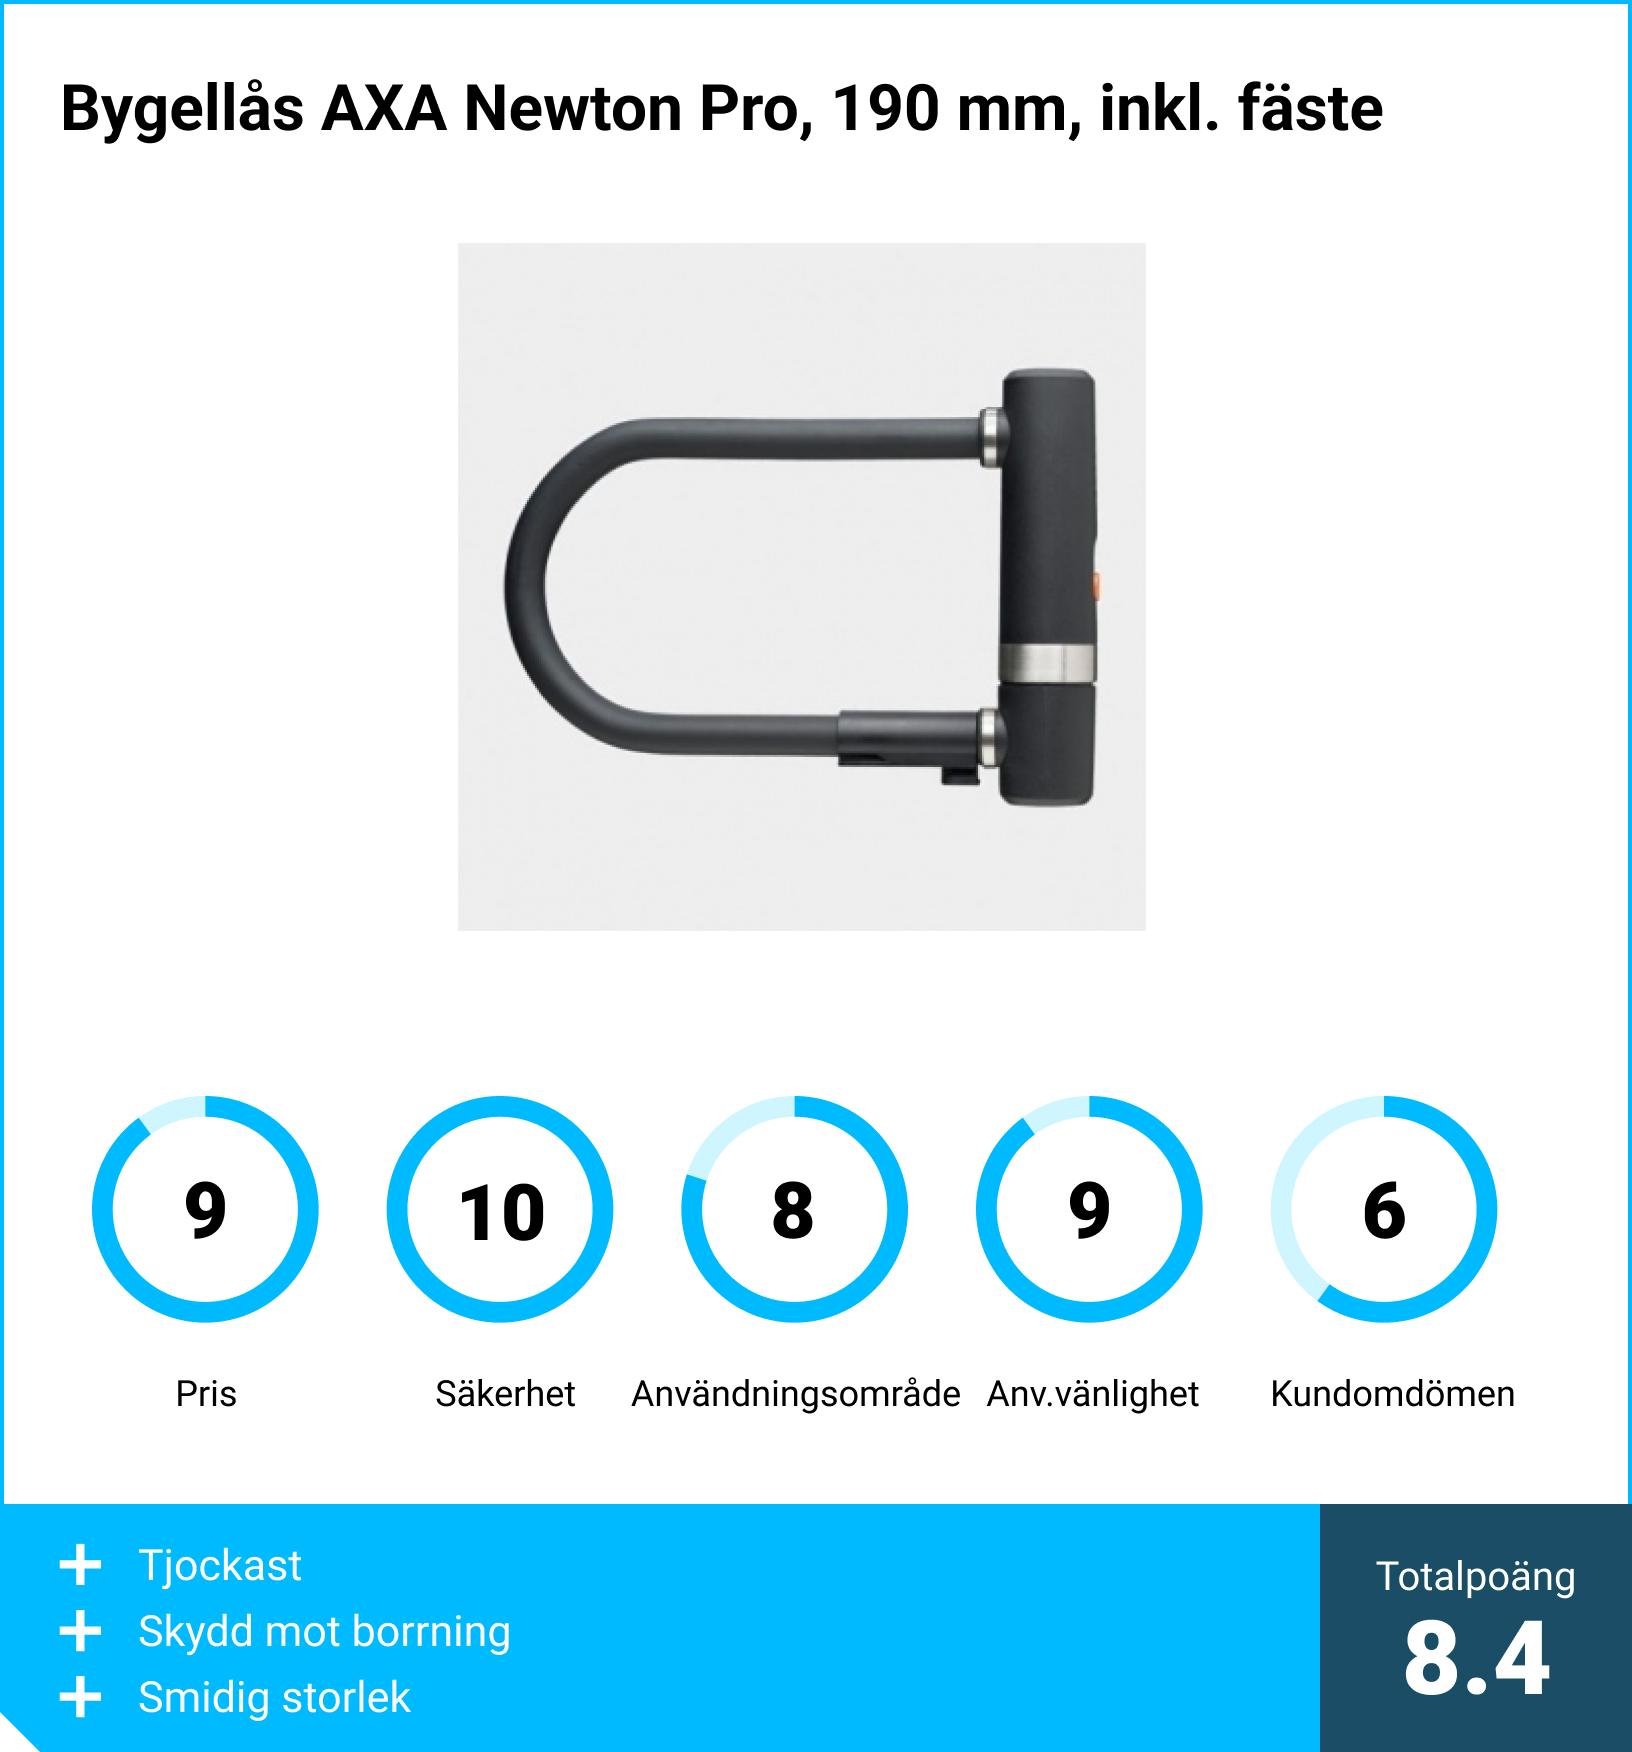 Cykellås bäst i test - Bygellås AXA Newton Pro, 190 mm, inkl. fäste